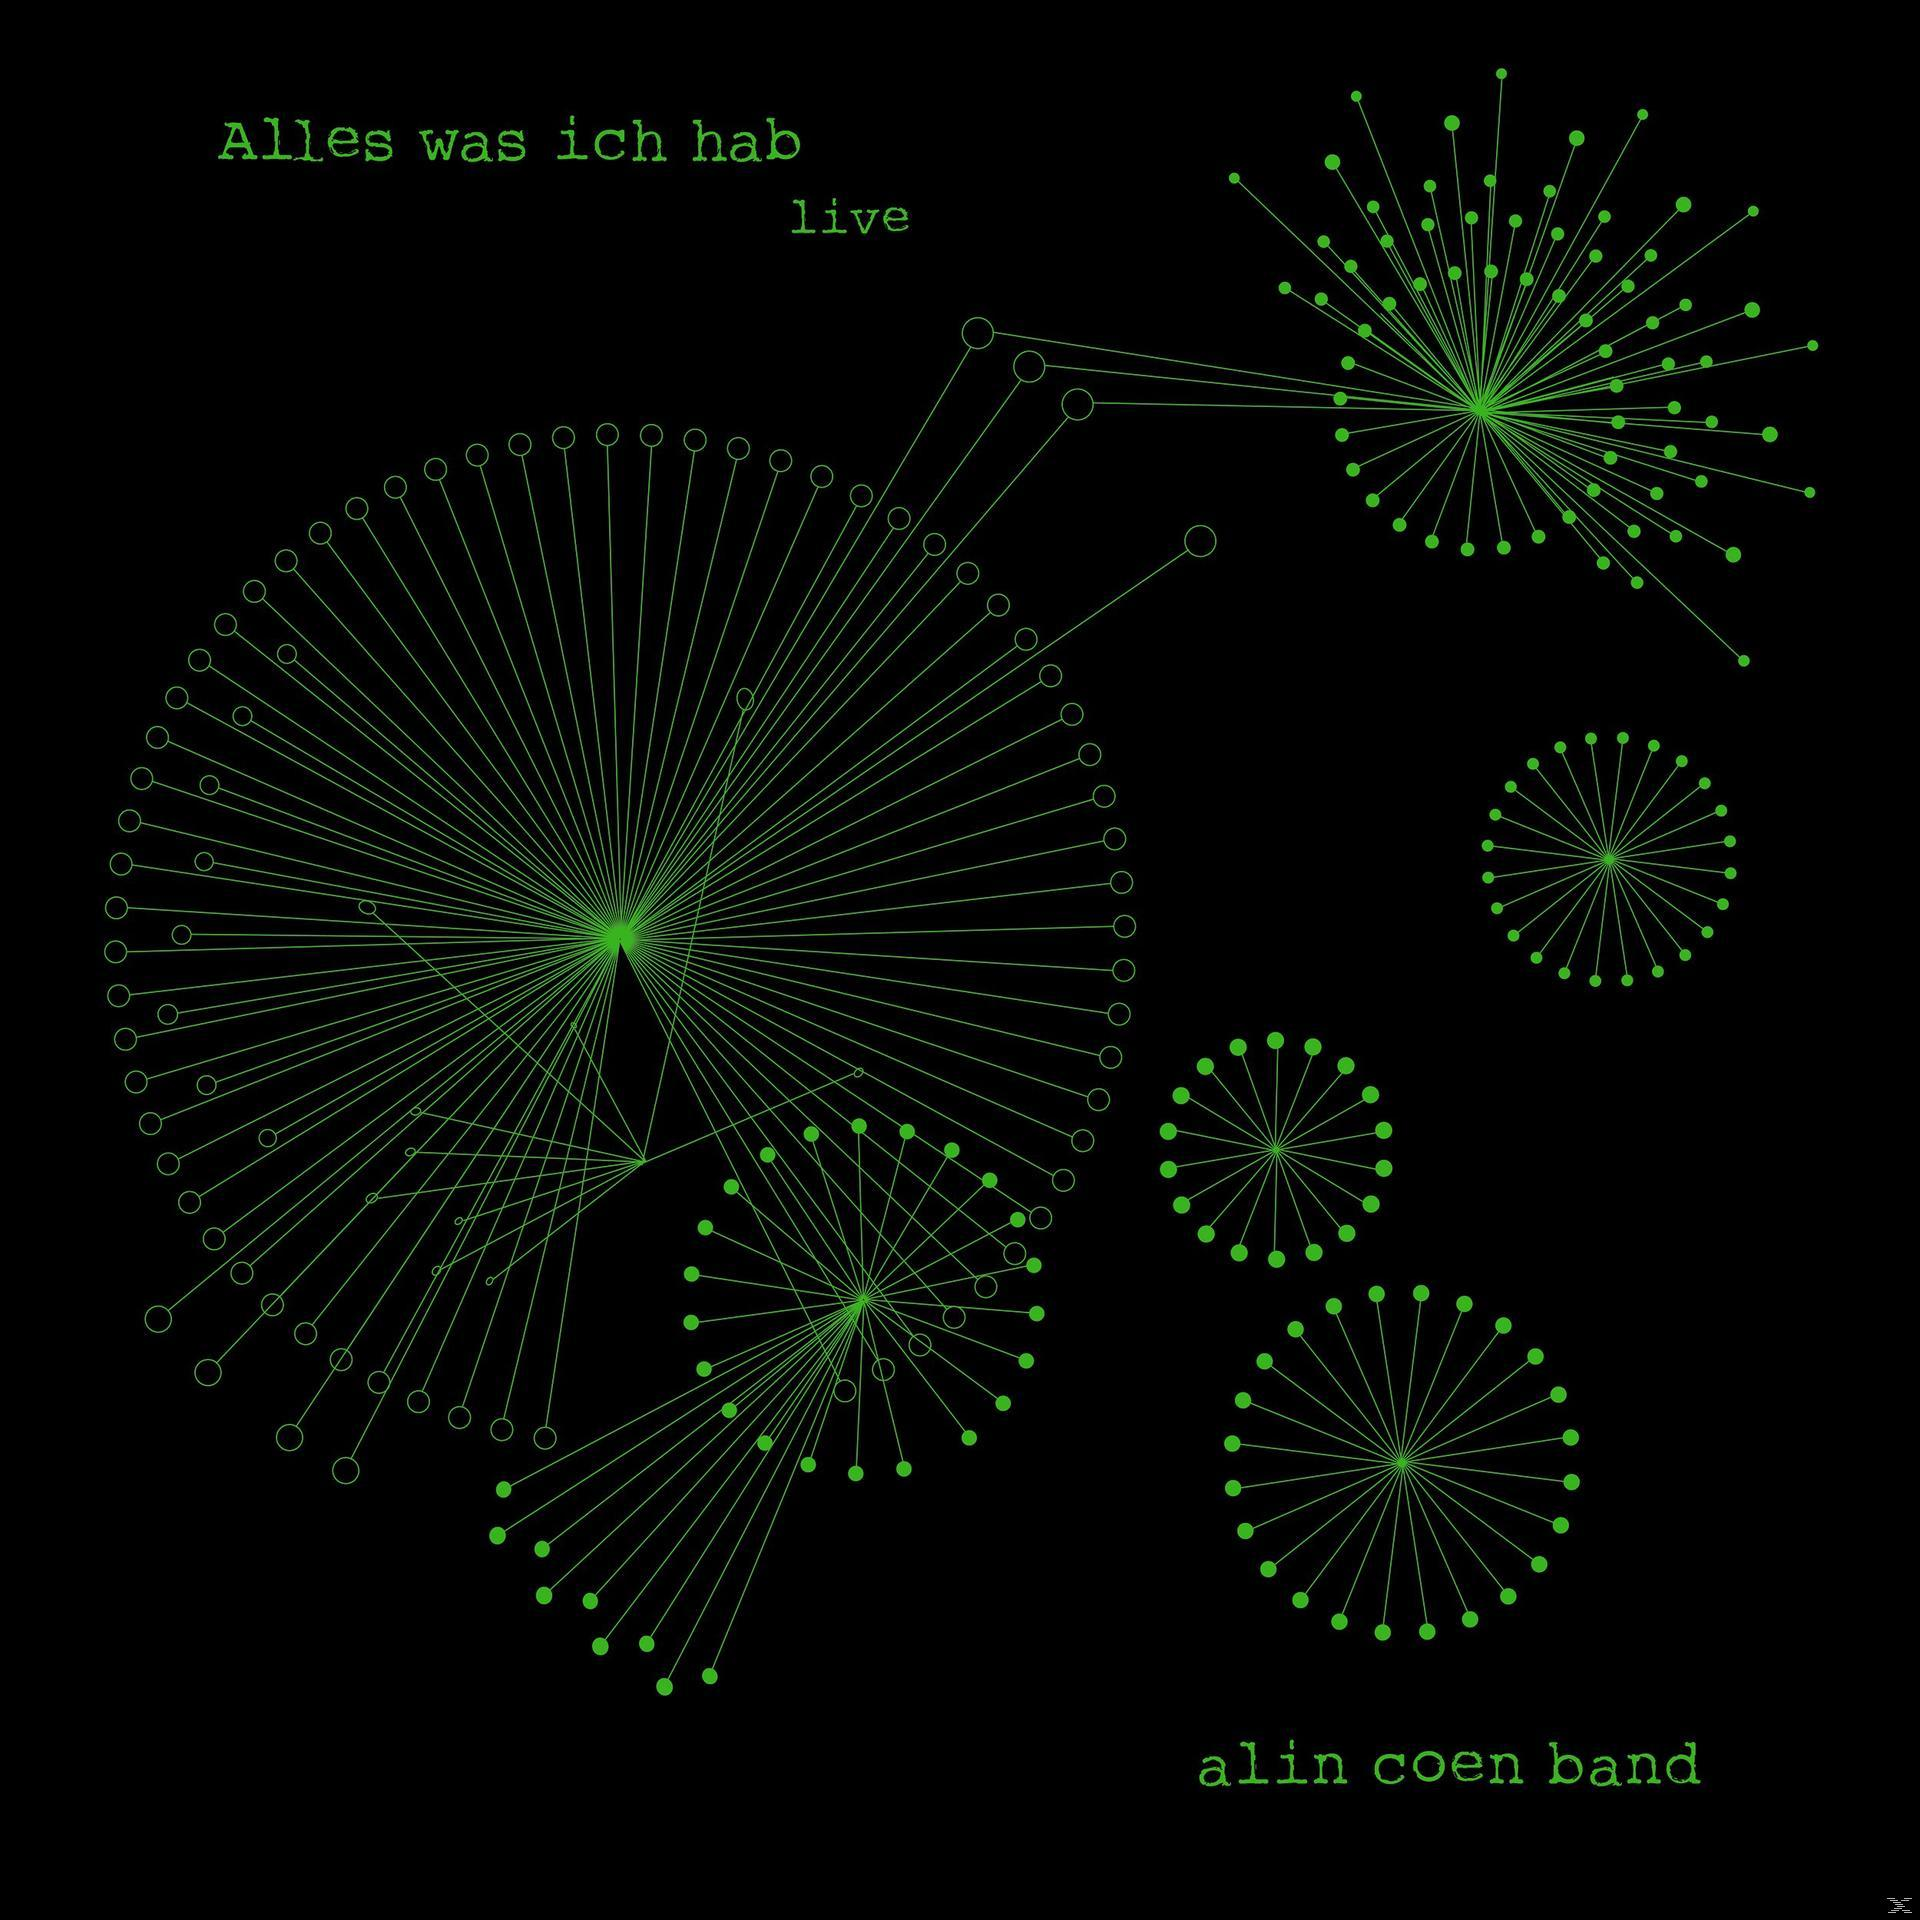 Download) Hab-Live - (Ltd.2LP+MP3) Alin Band Ich Alles - Coen (LP Was +